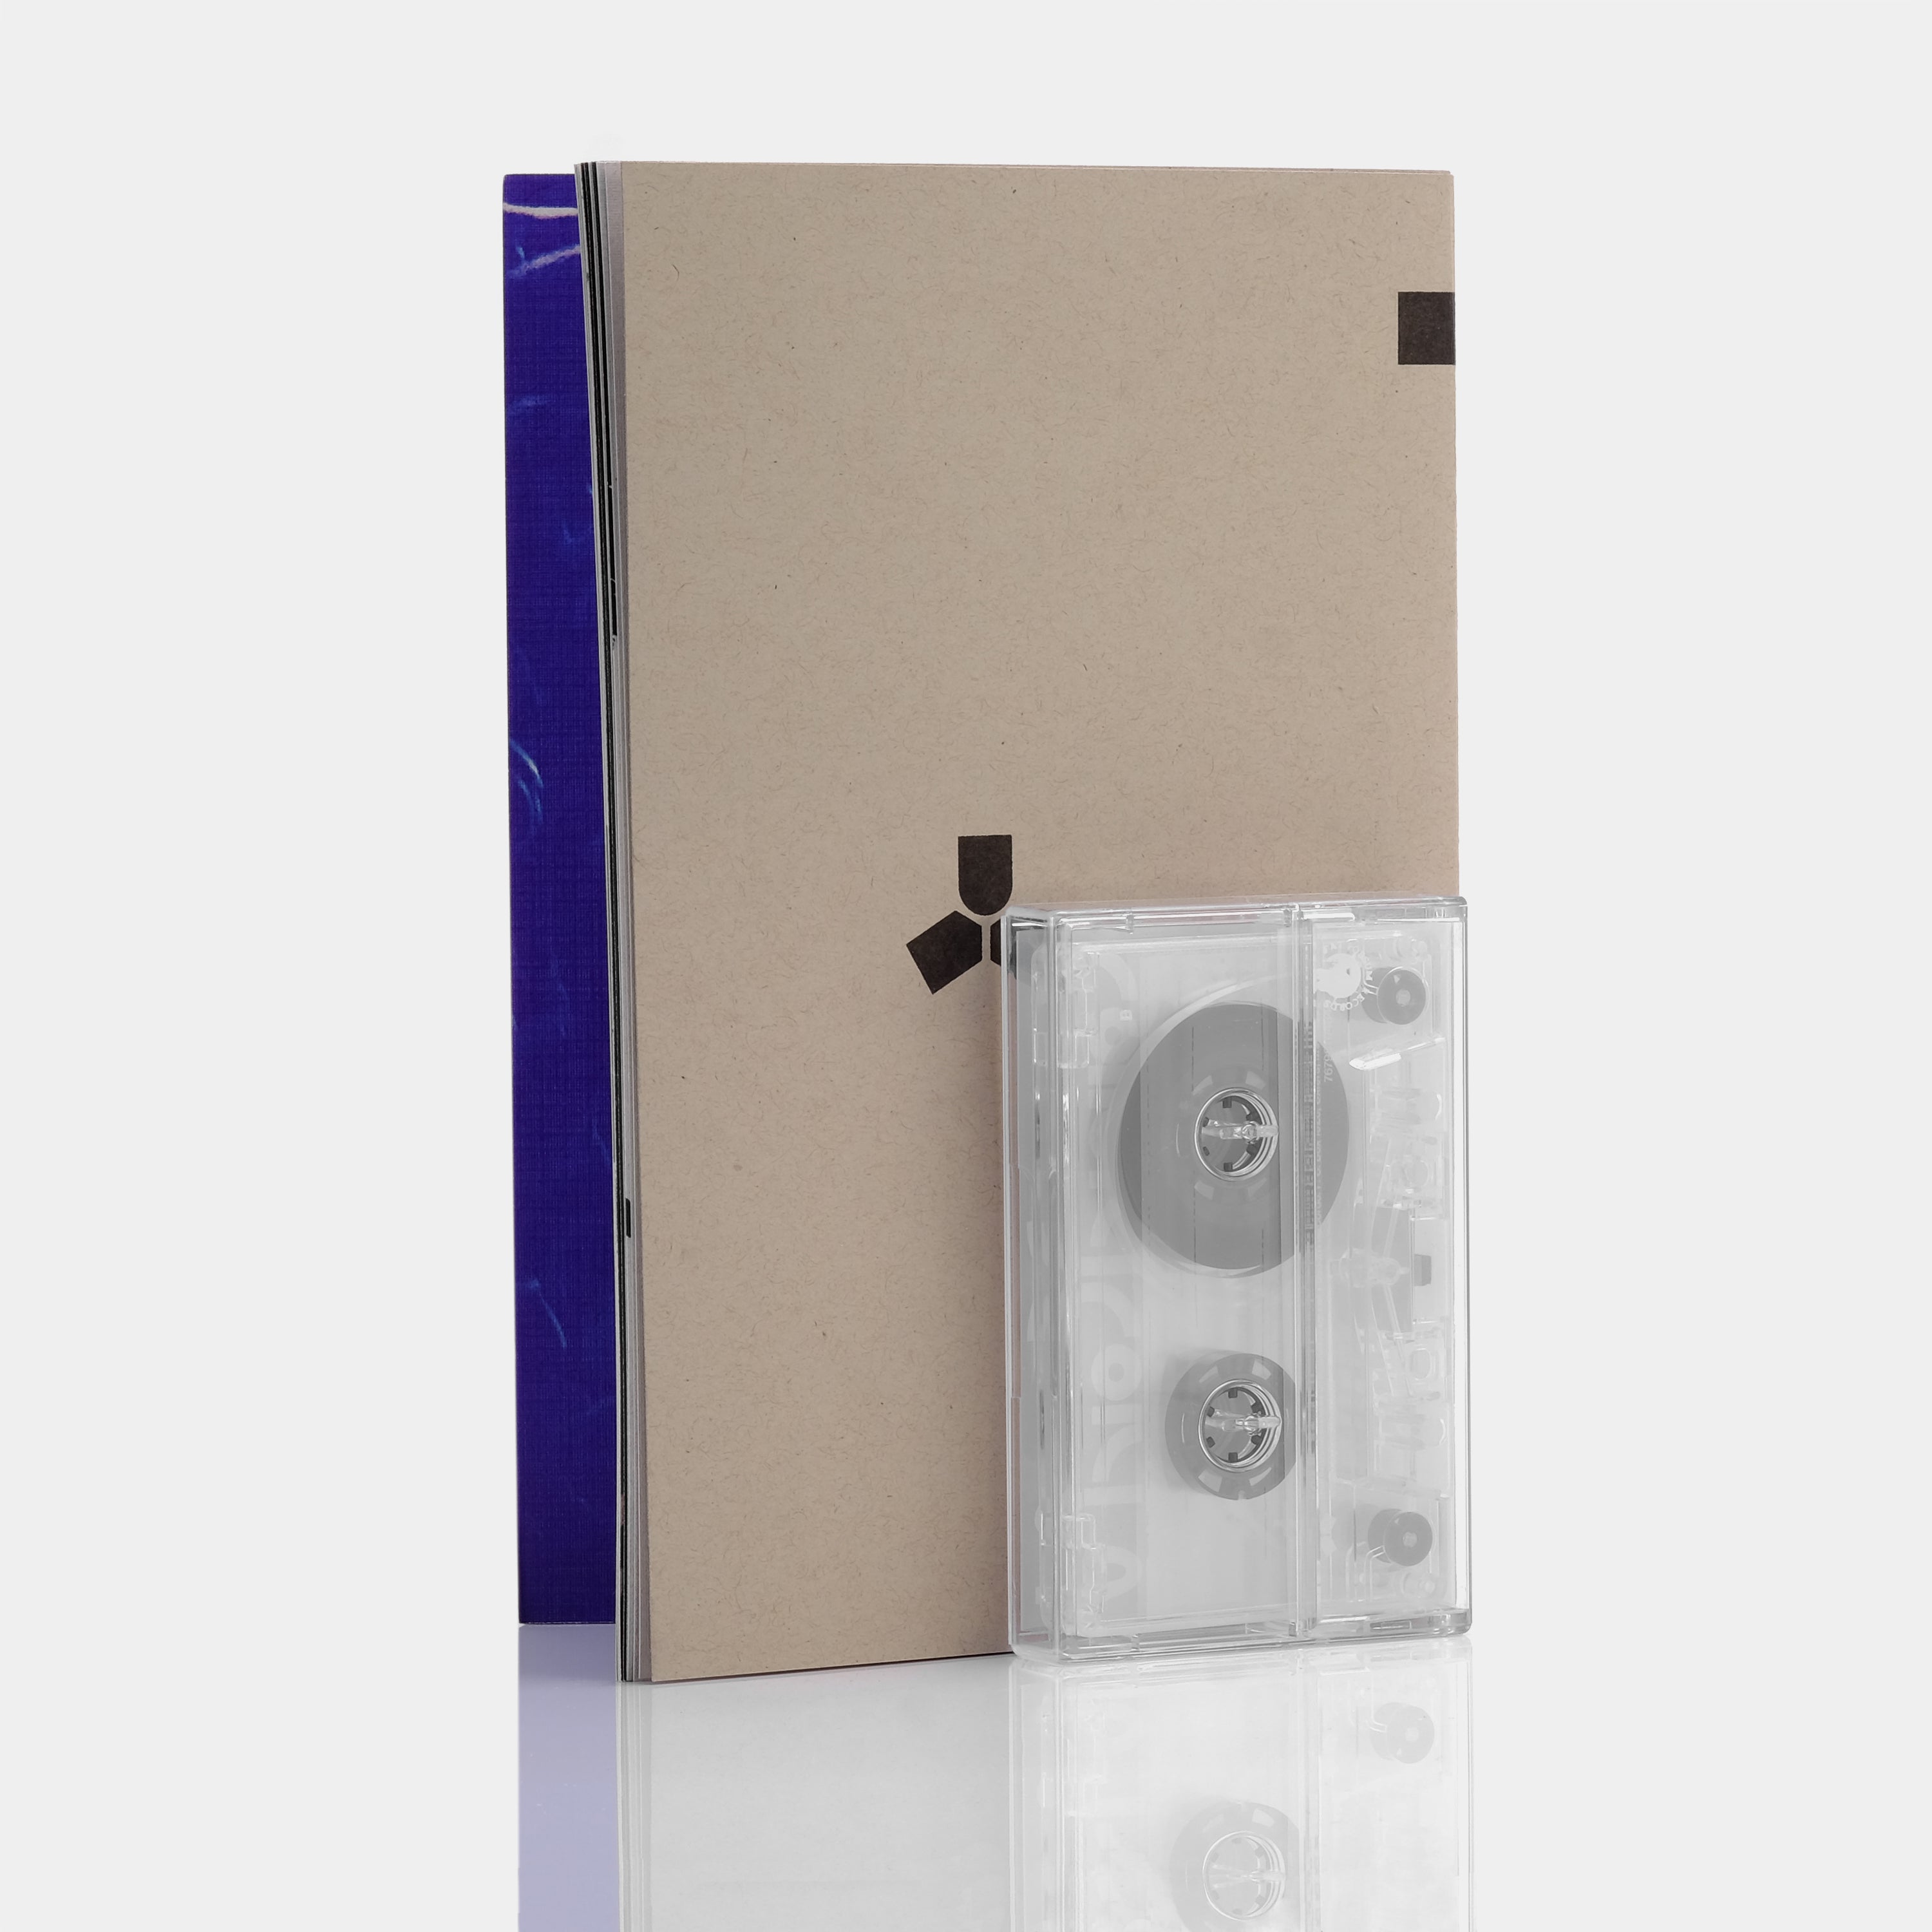 Trevor Powers - Capricorn Cassette Tape with Booklet